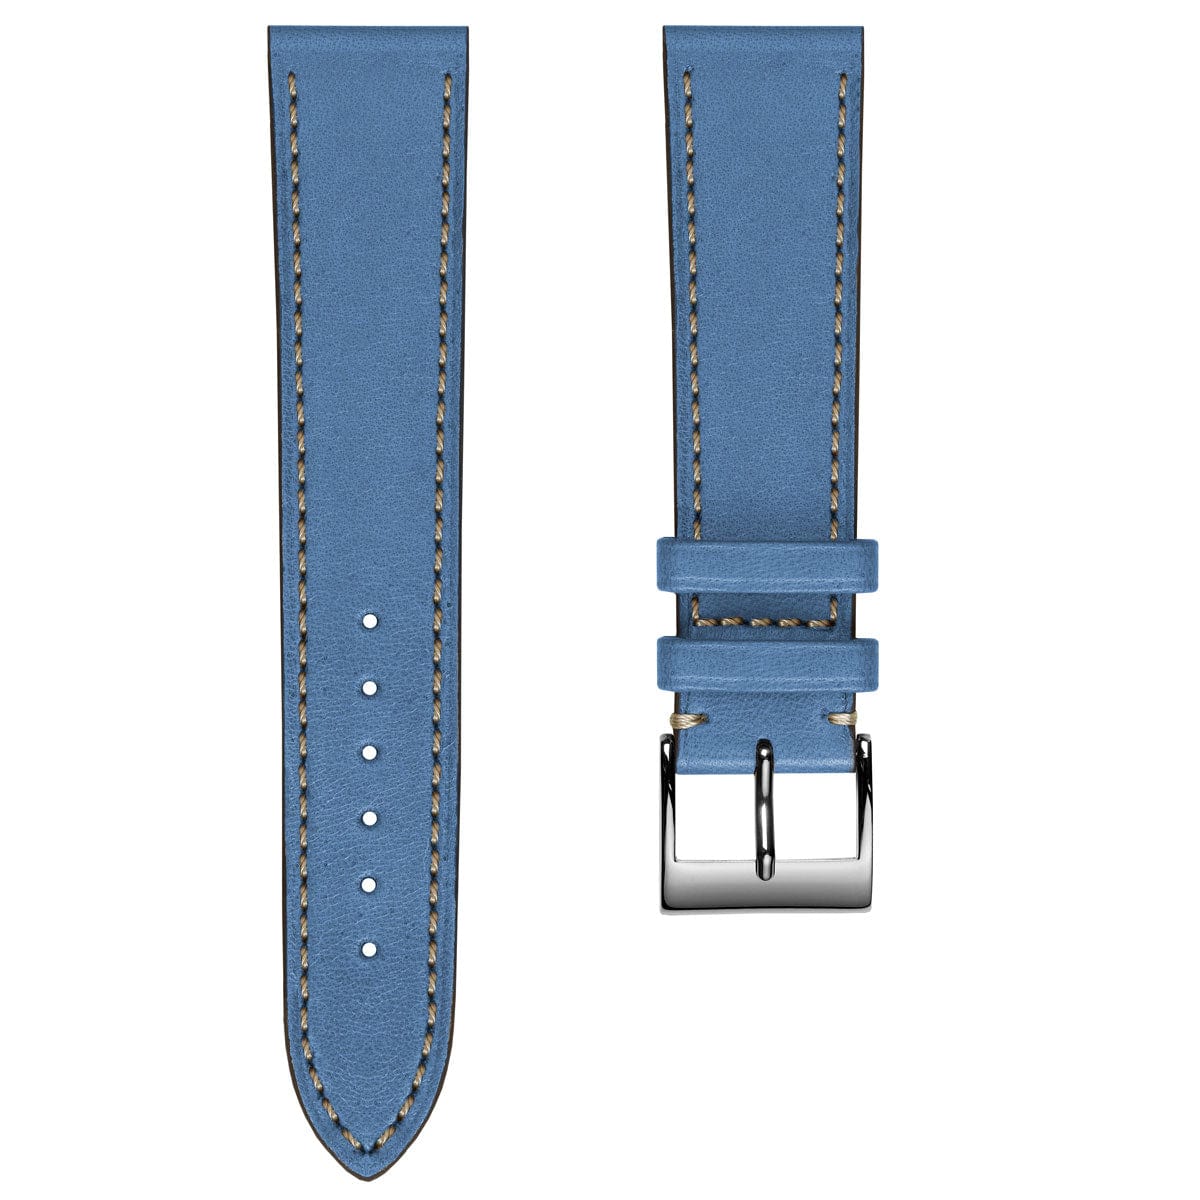 Ostend Baranil Flat Leather Watch Strap - Sky Blue